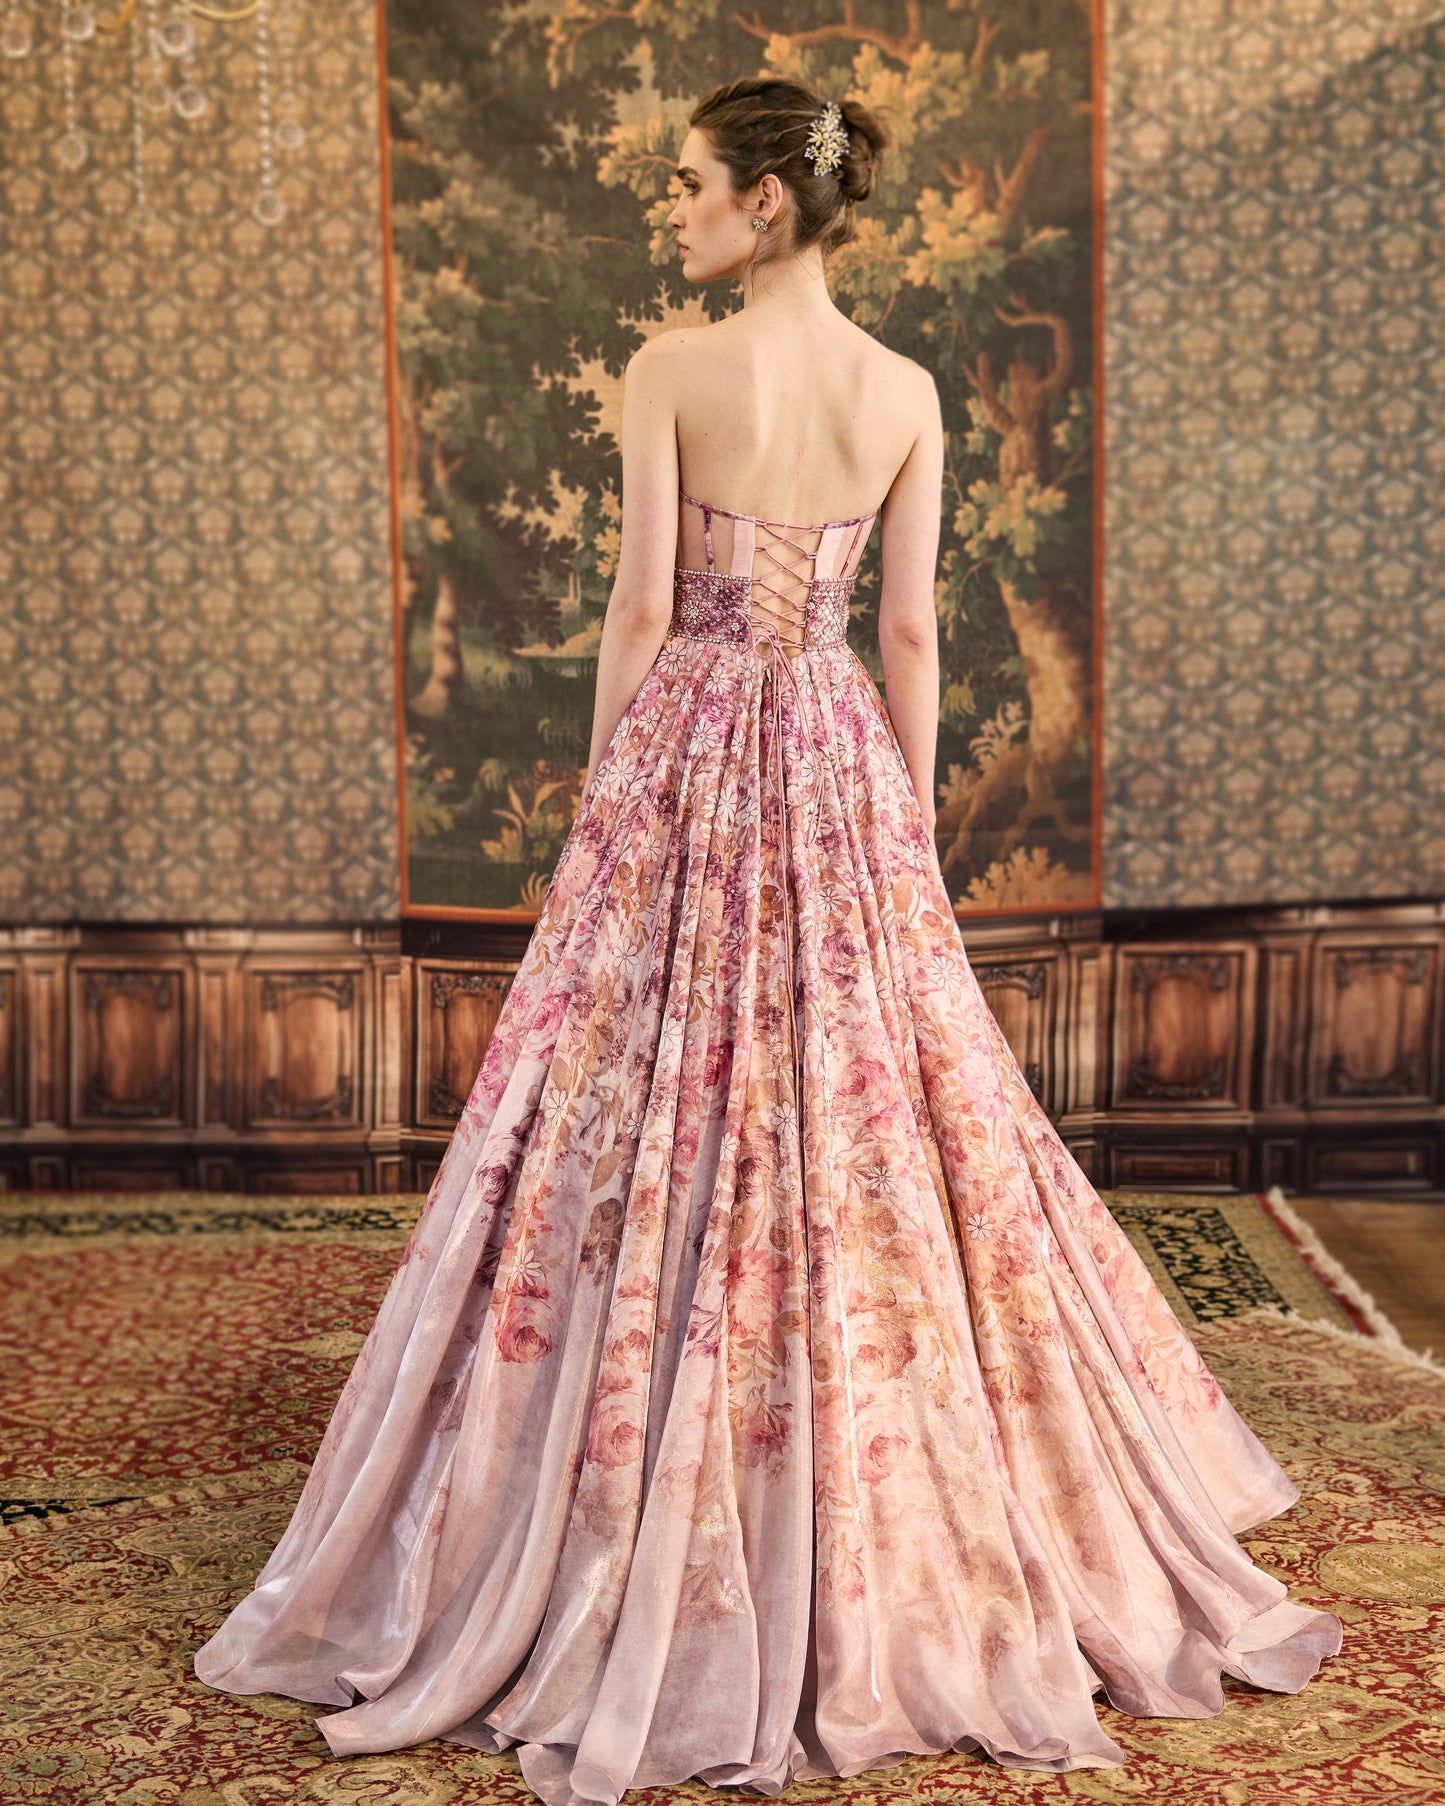 Peonies floral gown